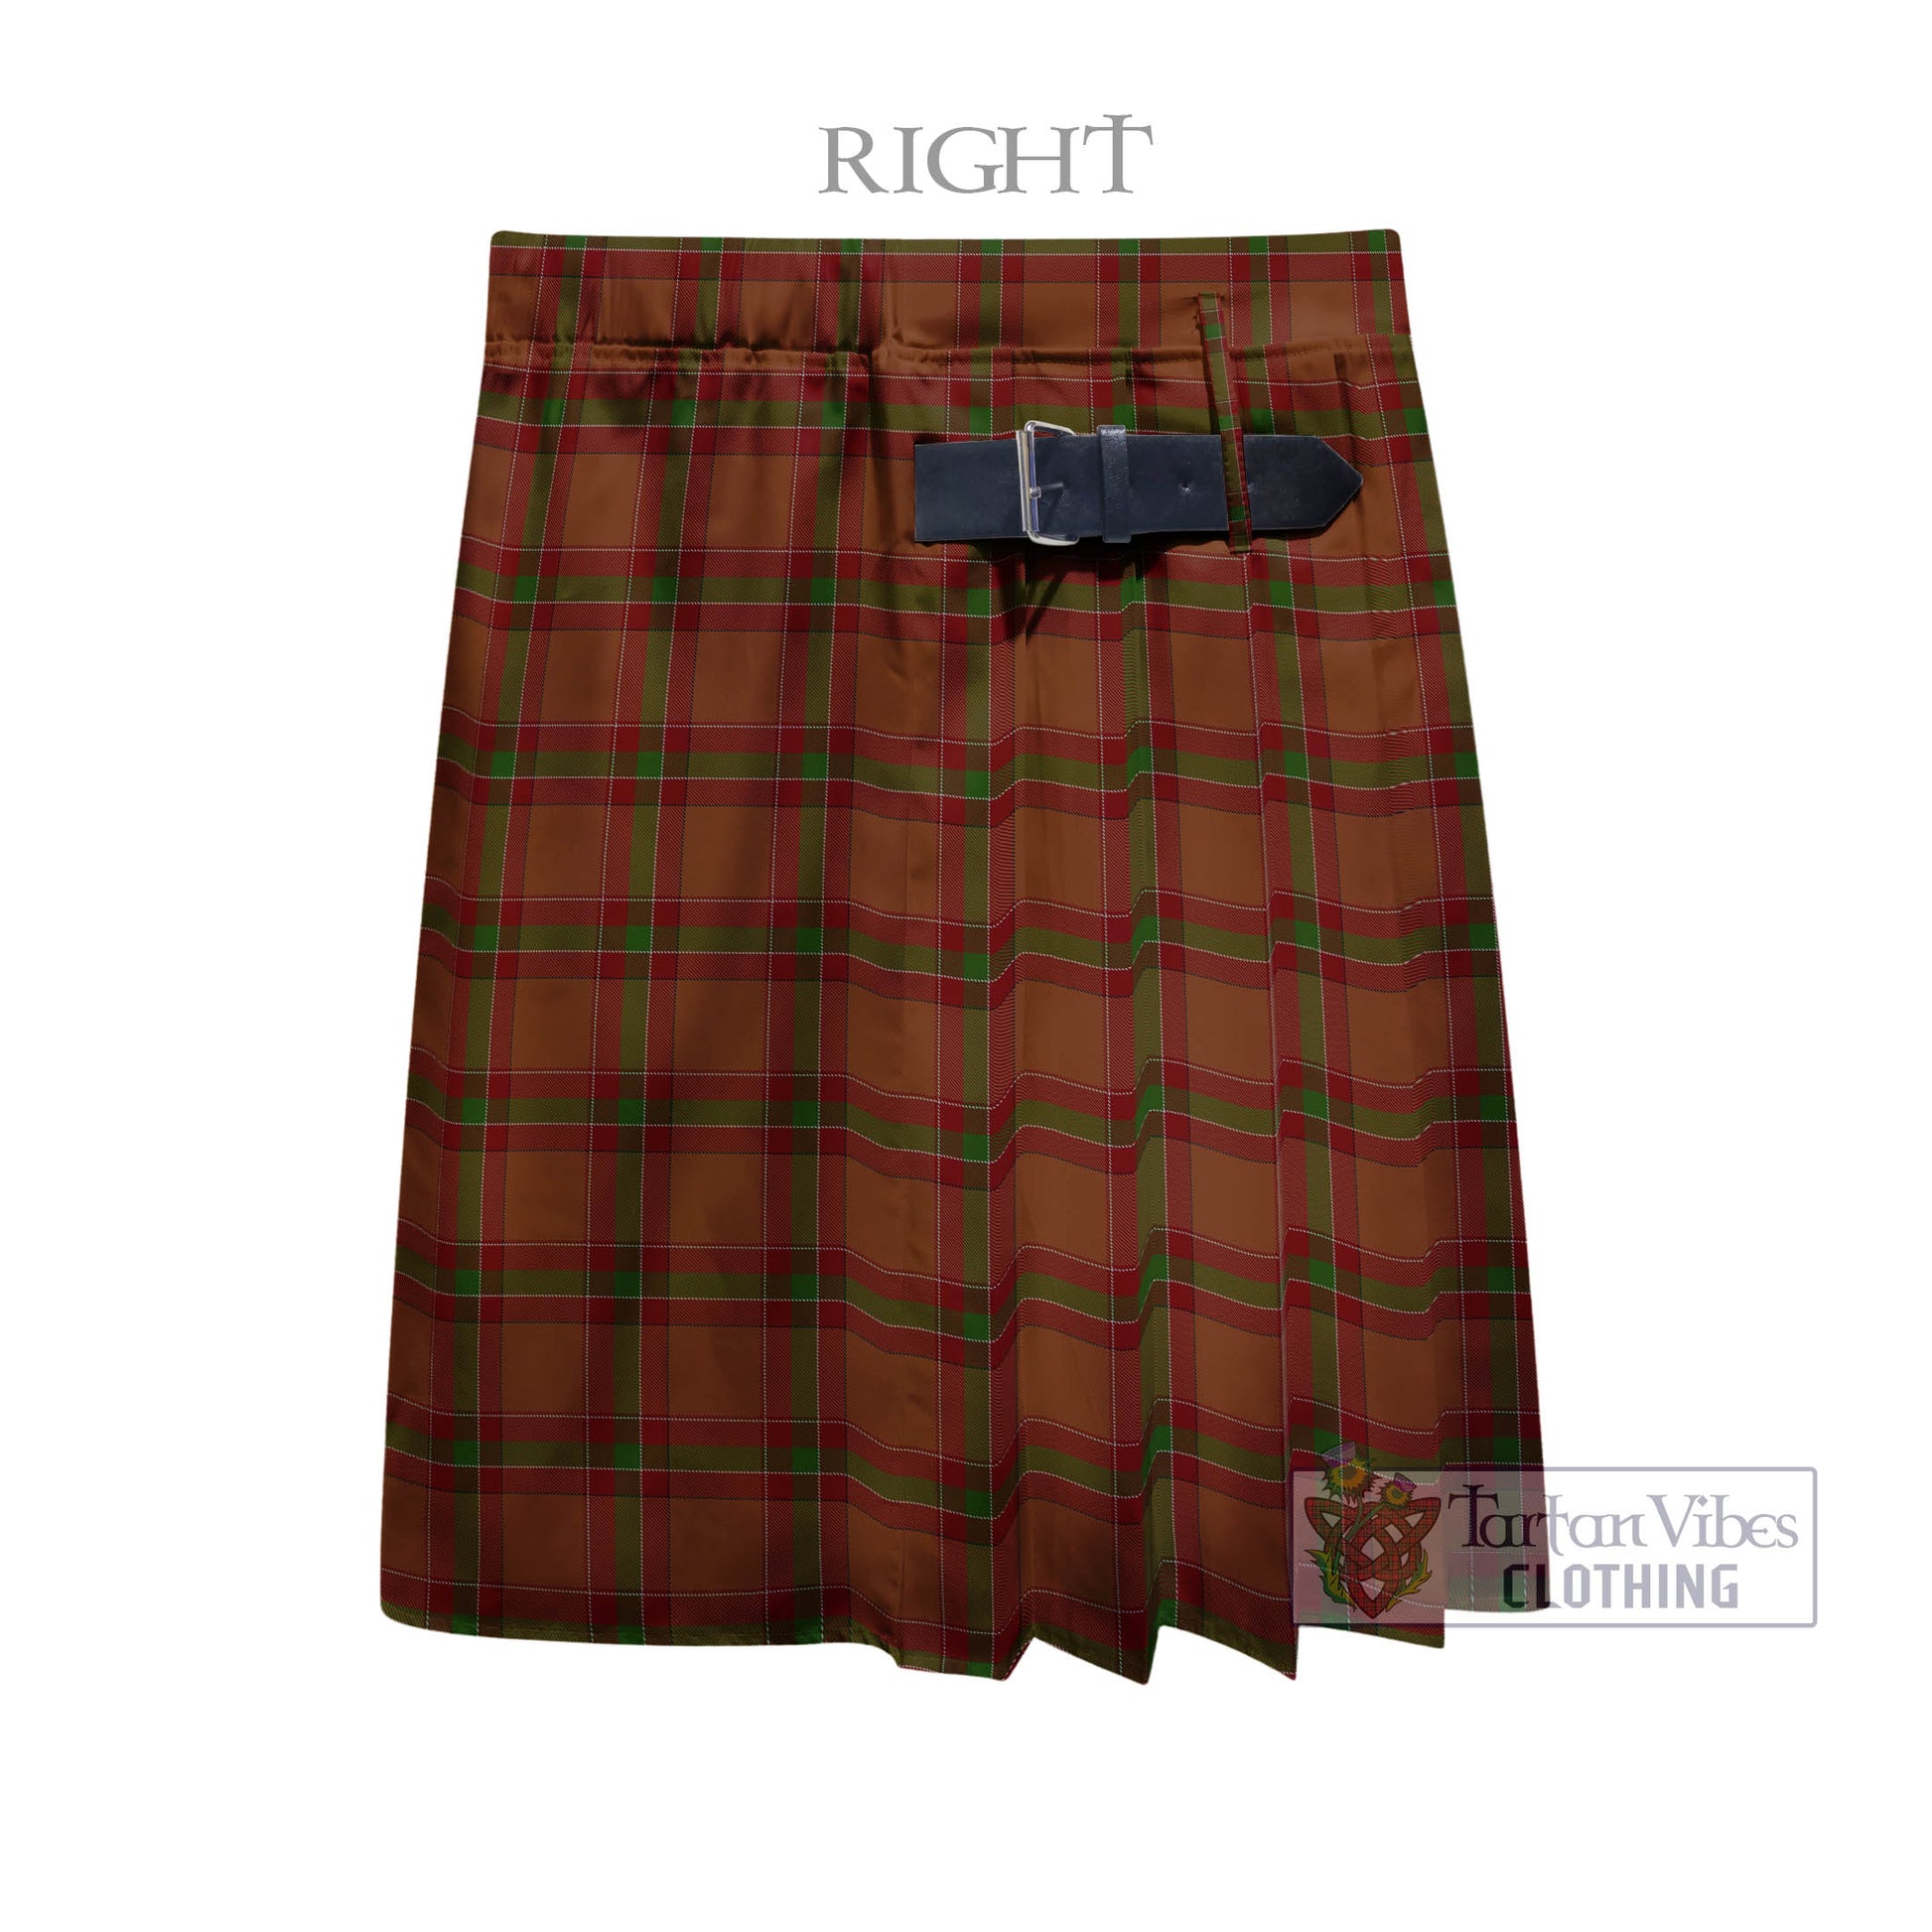 Tartan Vibes Clothing McBrayer Tartan Men's Pleated Skirt - Fashion Casual Retro Scottish Style